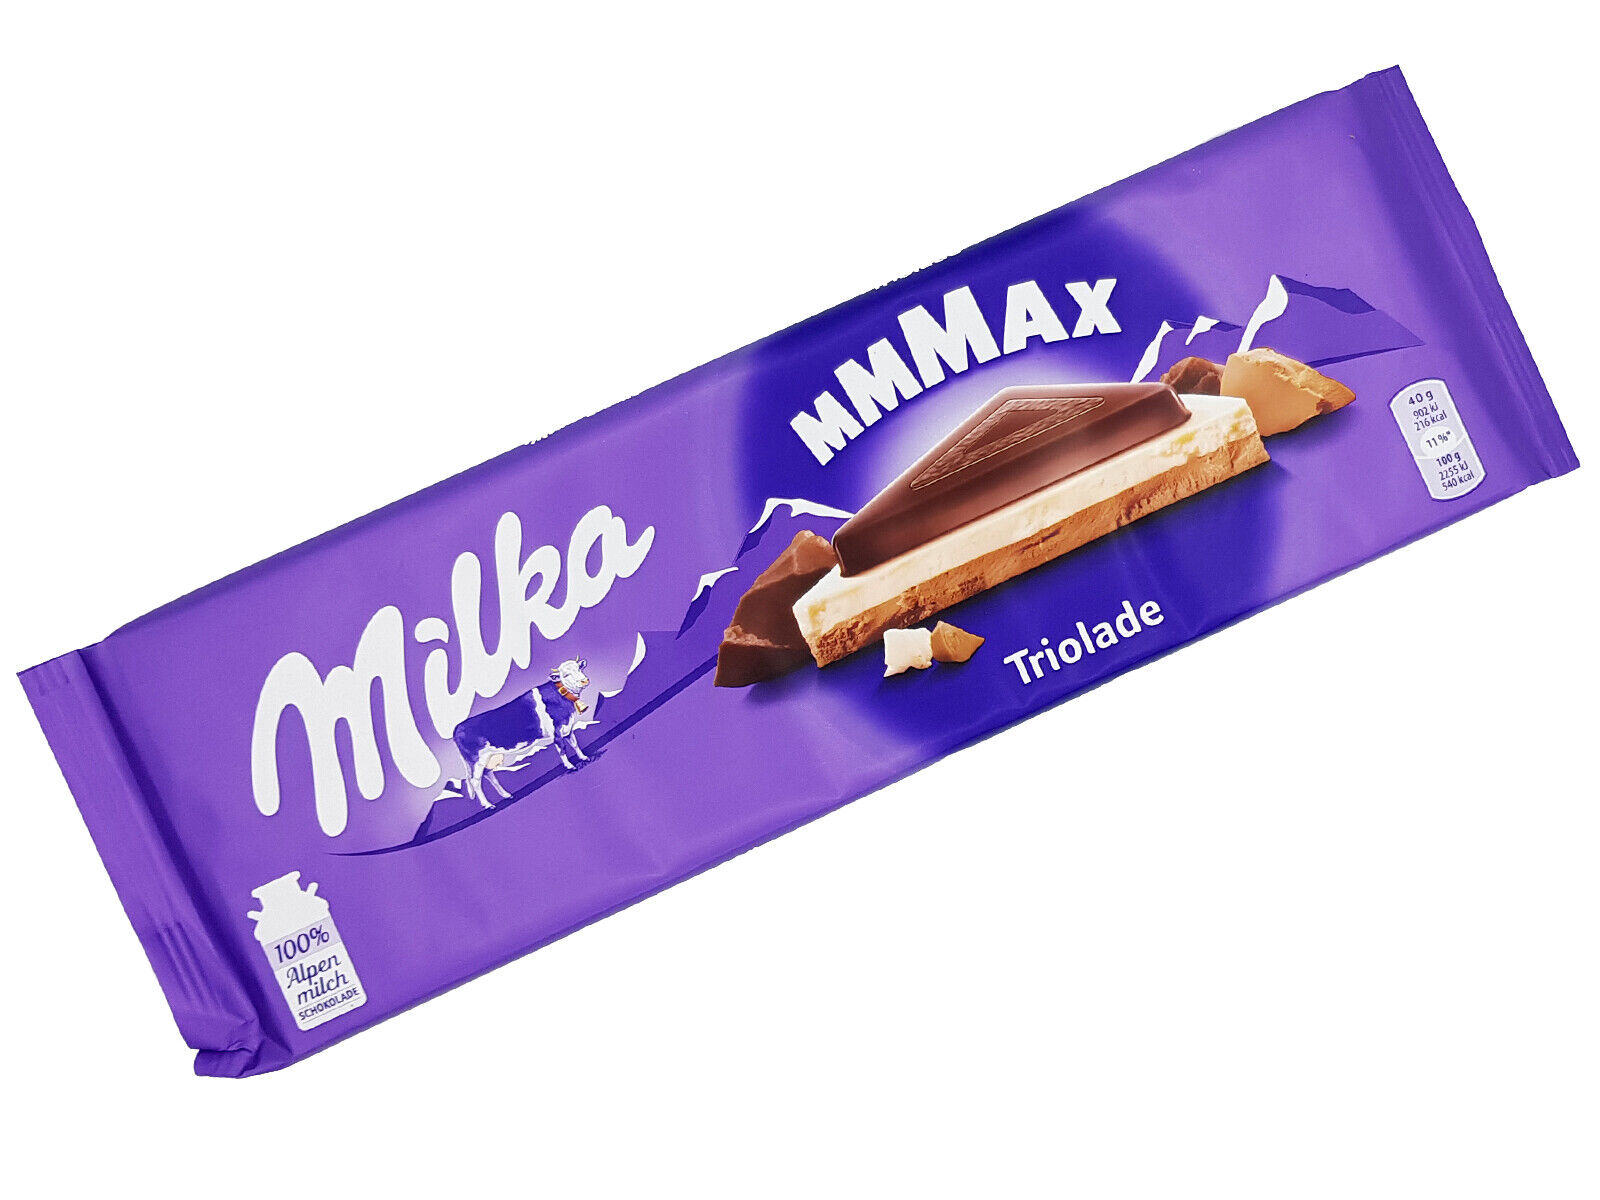 3x Milka MMMAX Triolade 🍫 840g / 1.85 lbs XXL Niemiecka czekolada TRACKED ✈